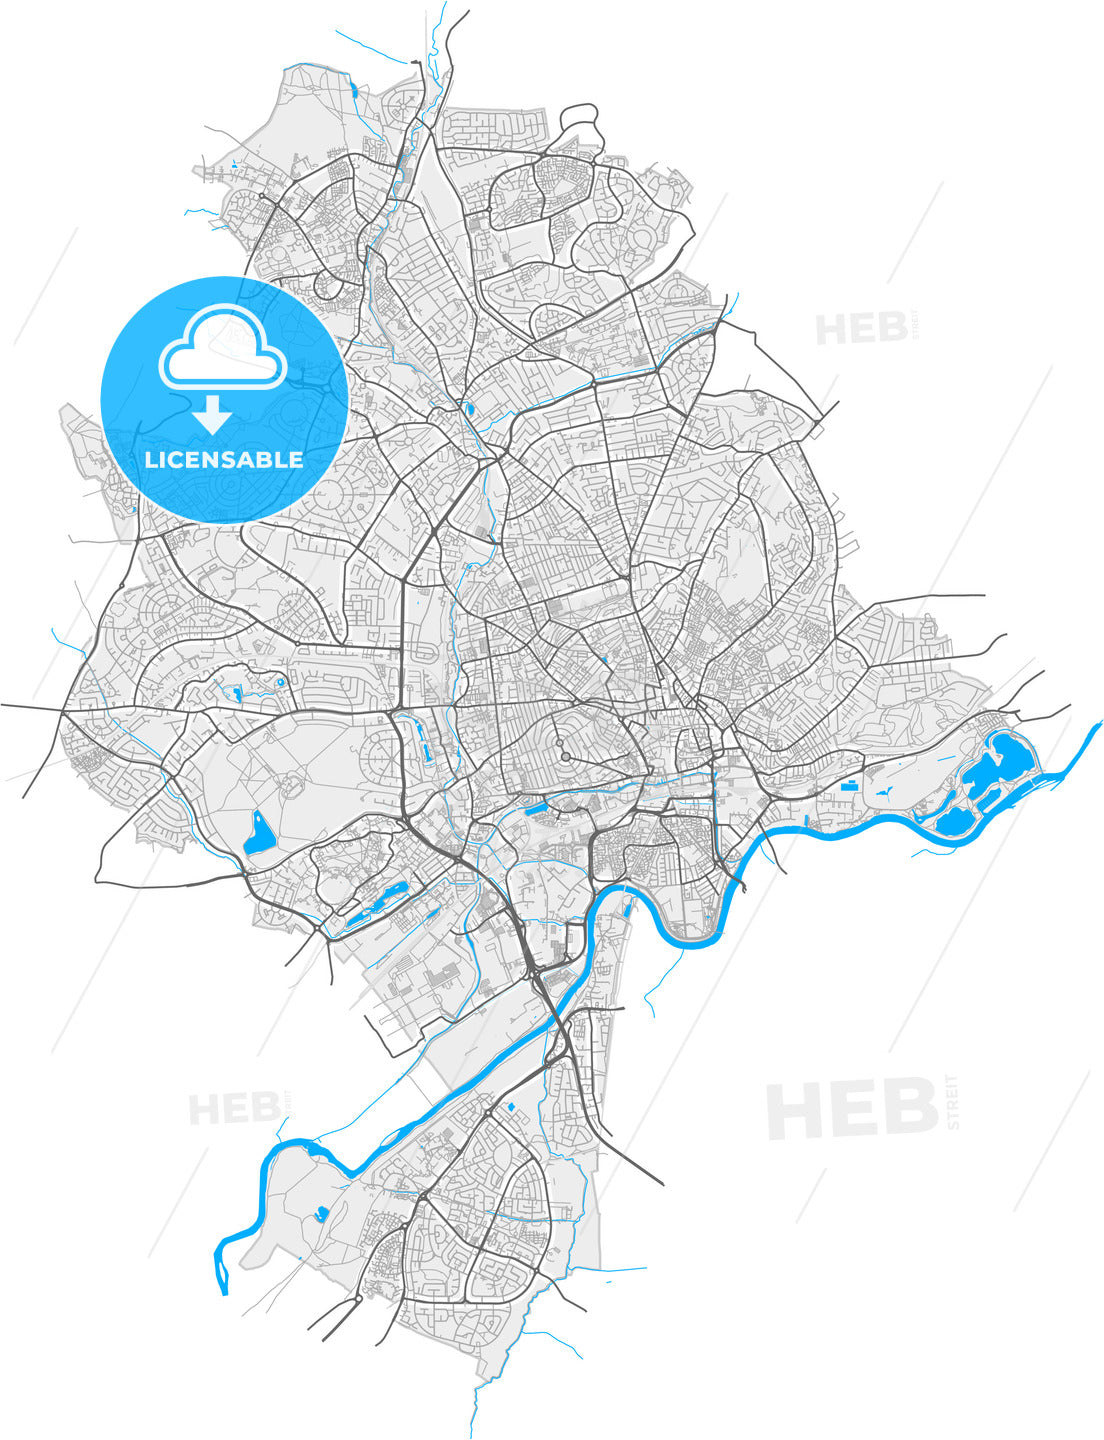 Nottingham, East Midlands, England, high quality vector map